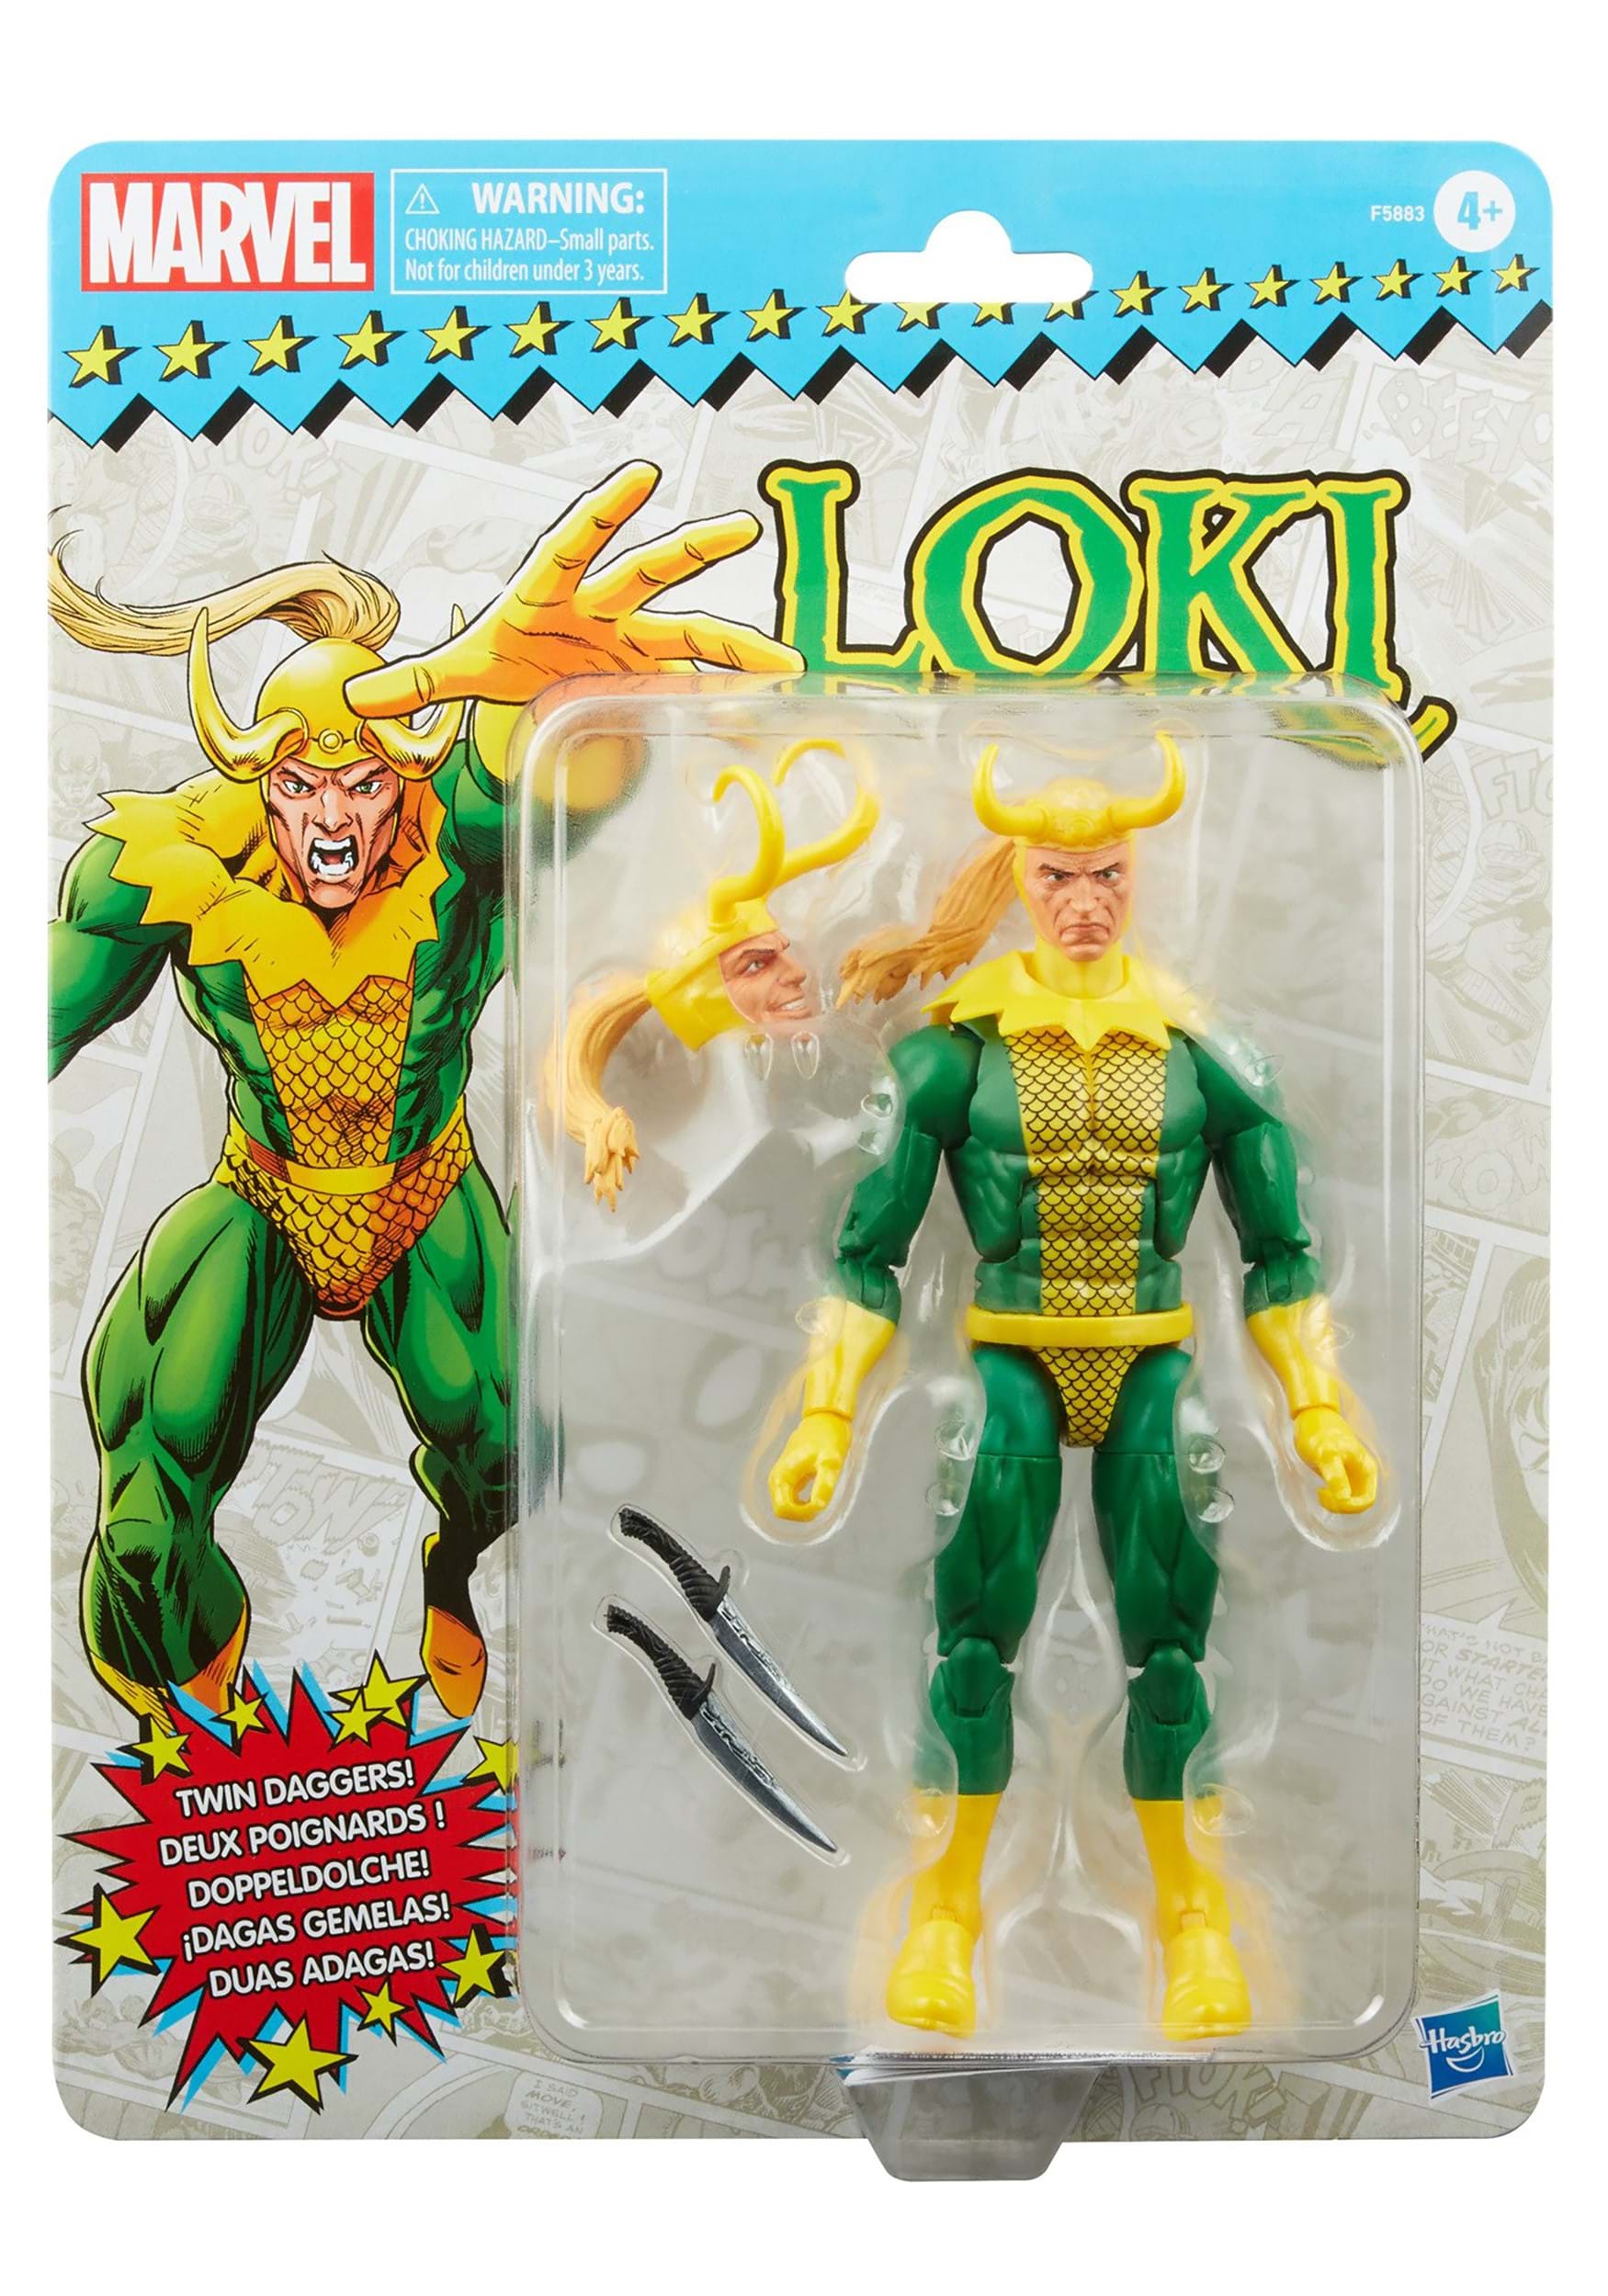 Retro Marvel Legends Loki 6" Action Figure